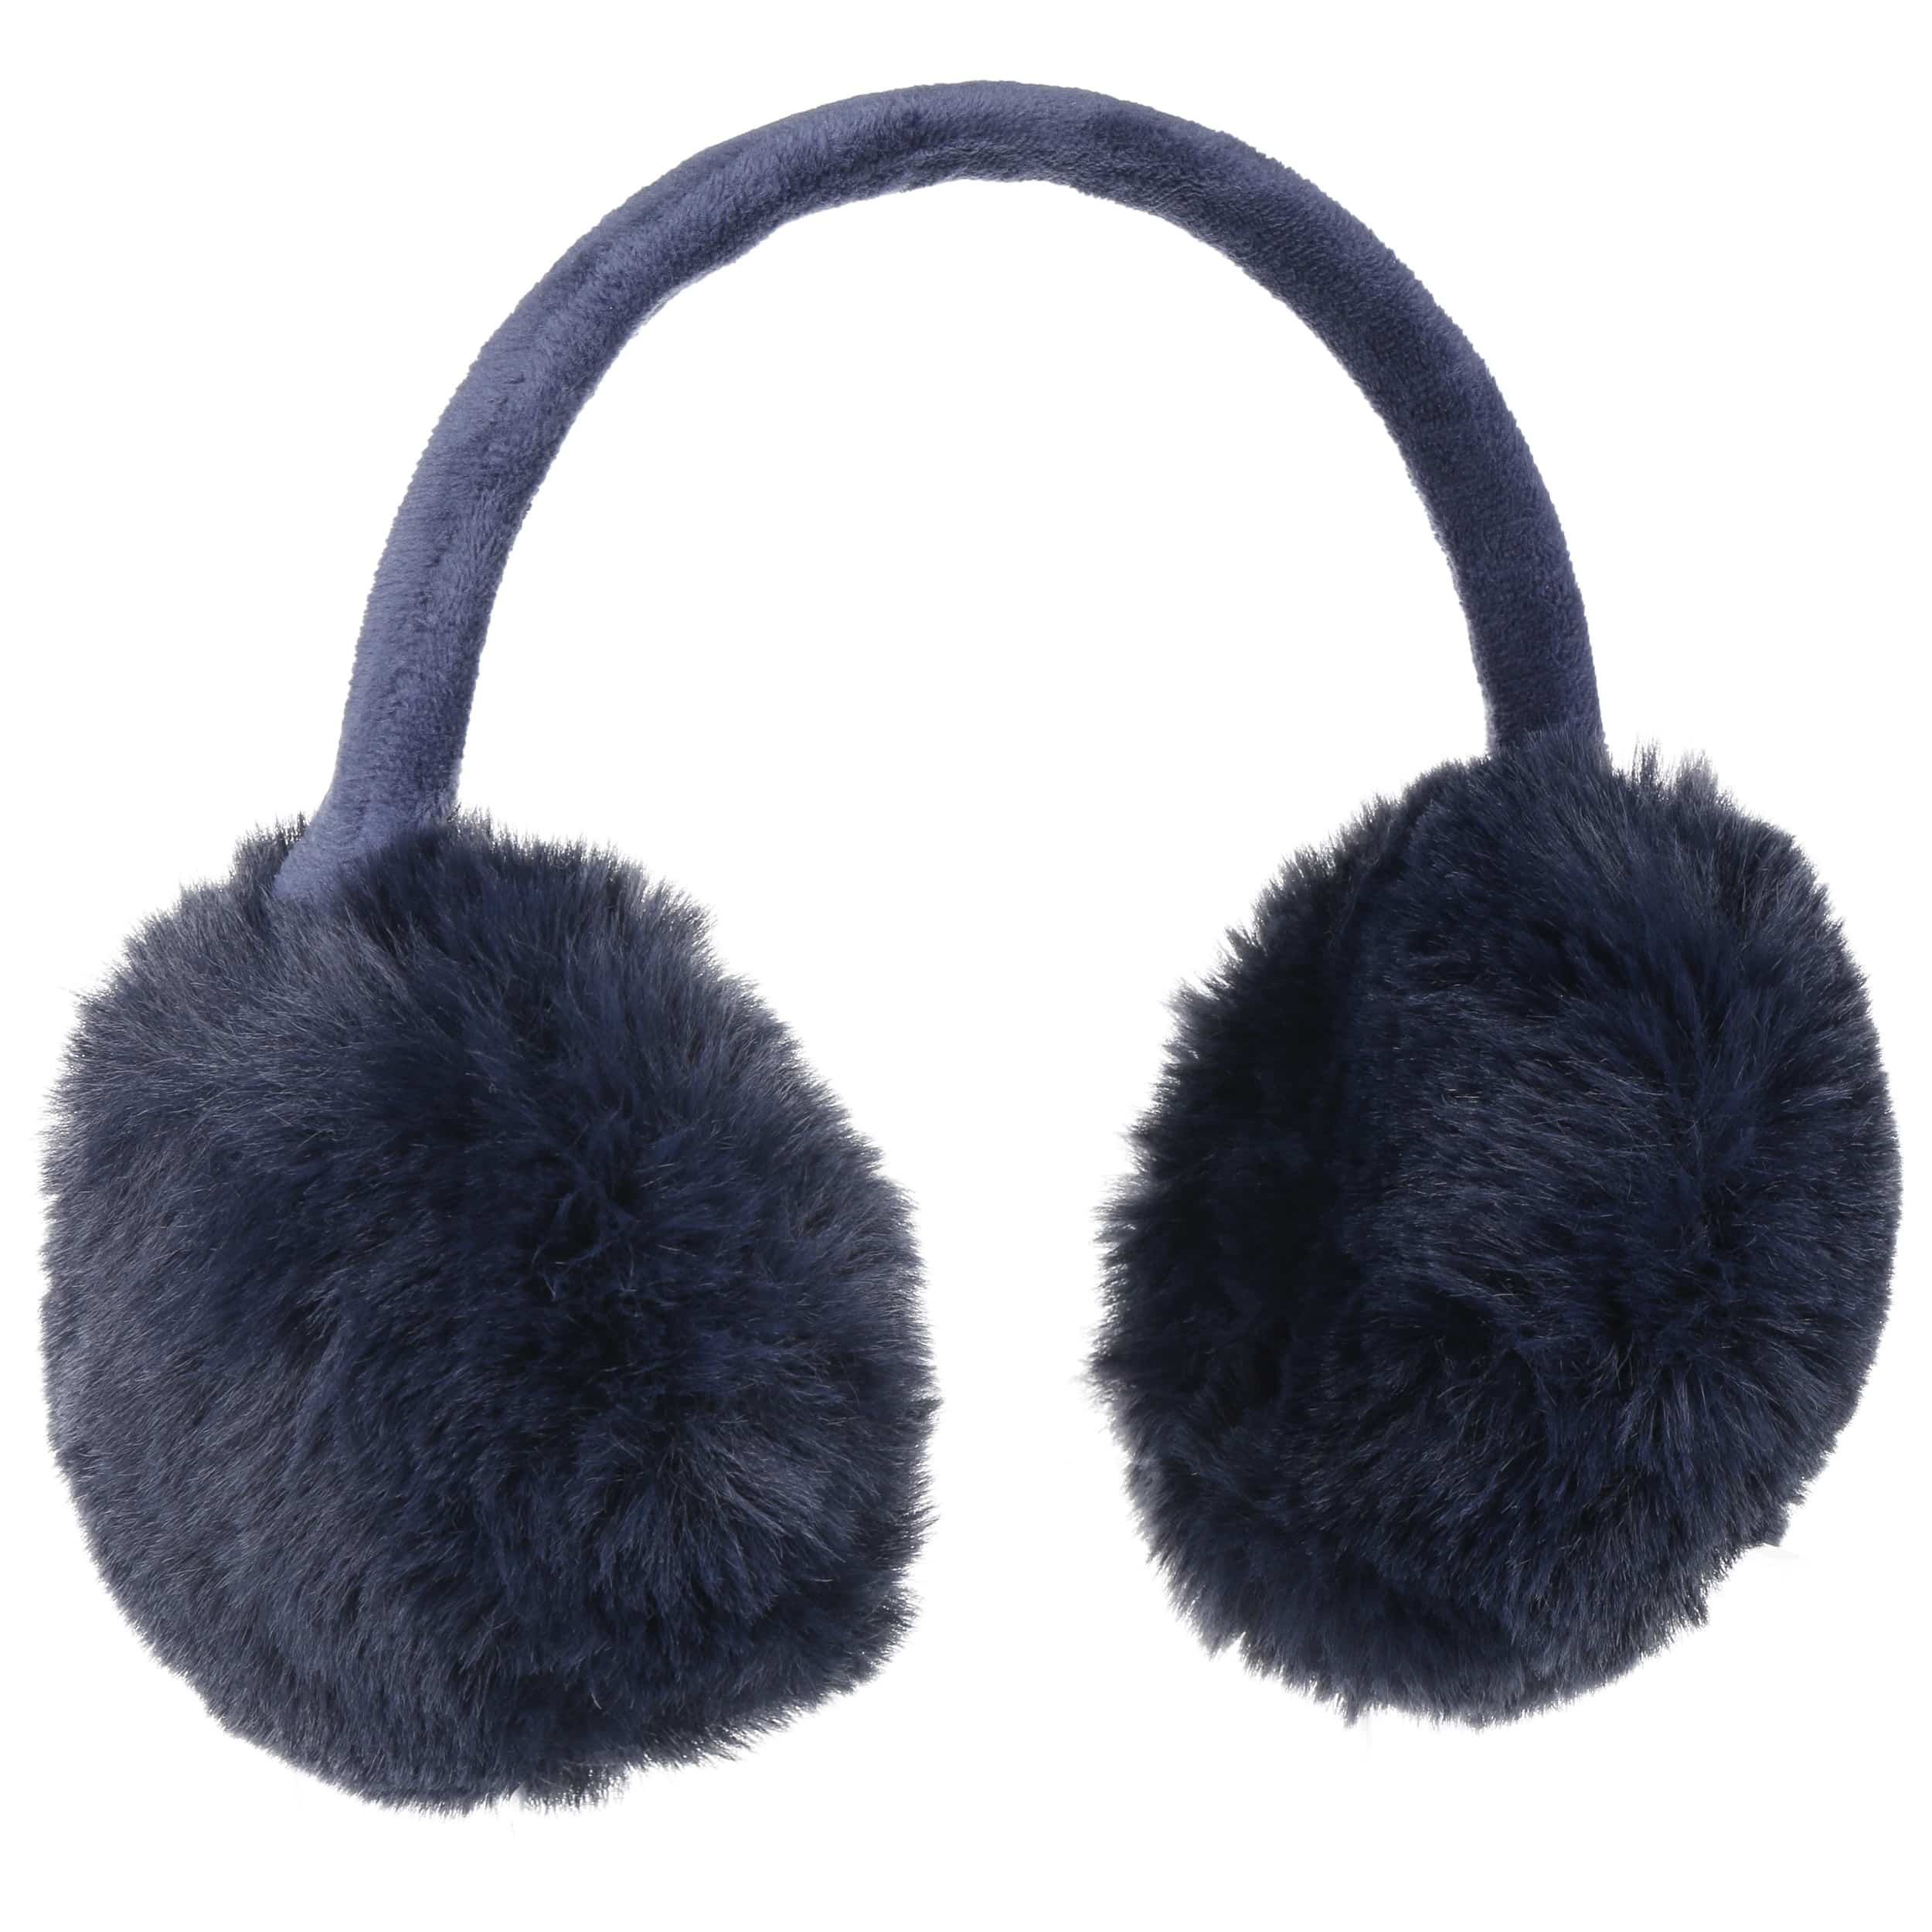 Bandeau Cache-oreilles bleu marine AKAI : Accessoires